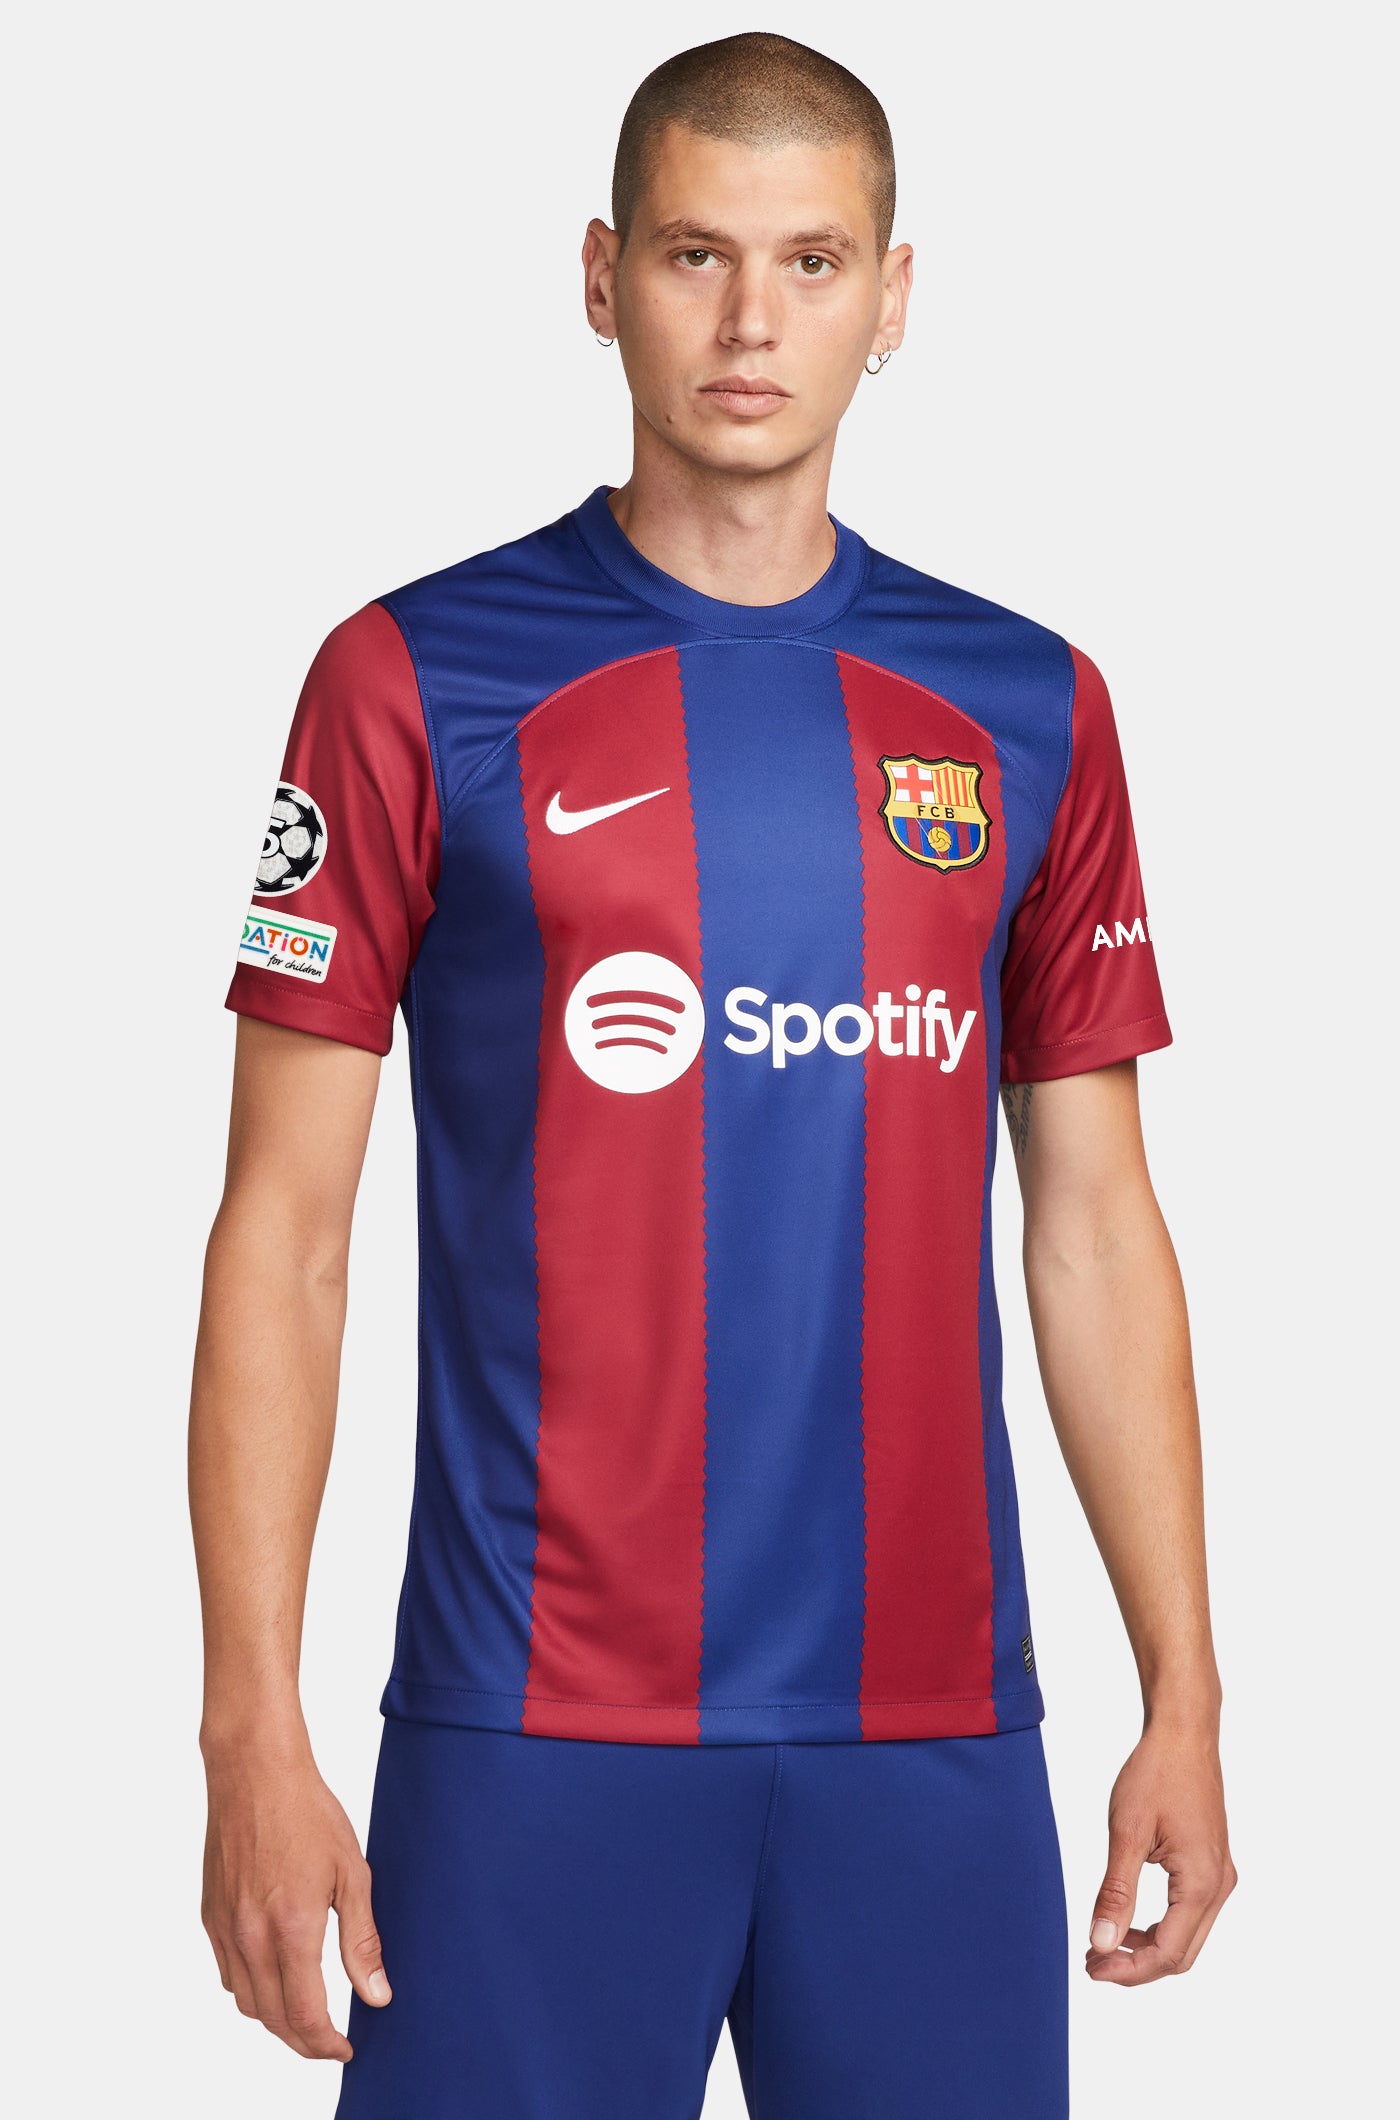 UCL FC Barcelona home shirt 23/24 - ROMEU